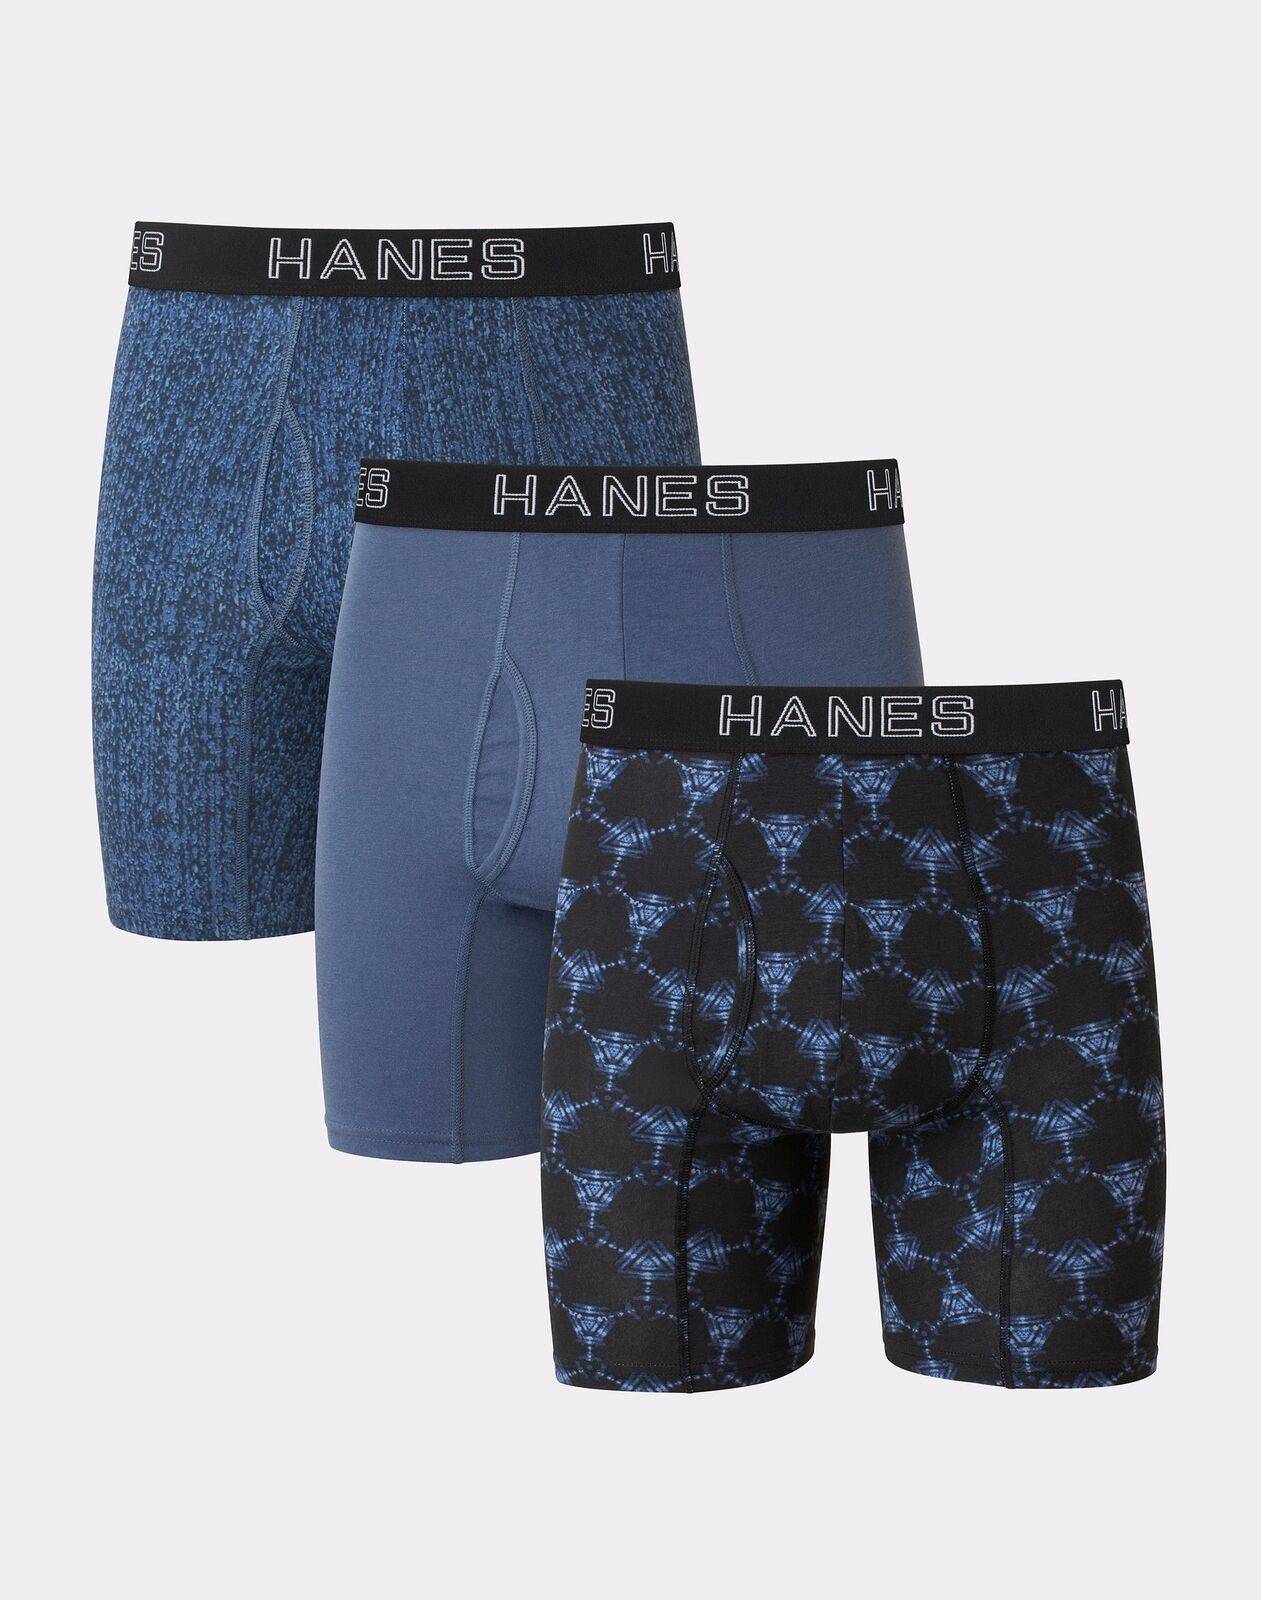 Boxer Brief 3-Pack Ultimate Comfort Flex Fit Cotton Stretch Underwear  Assorted Blues -S - Invastor